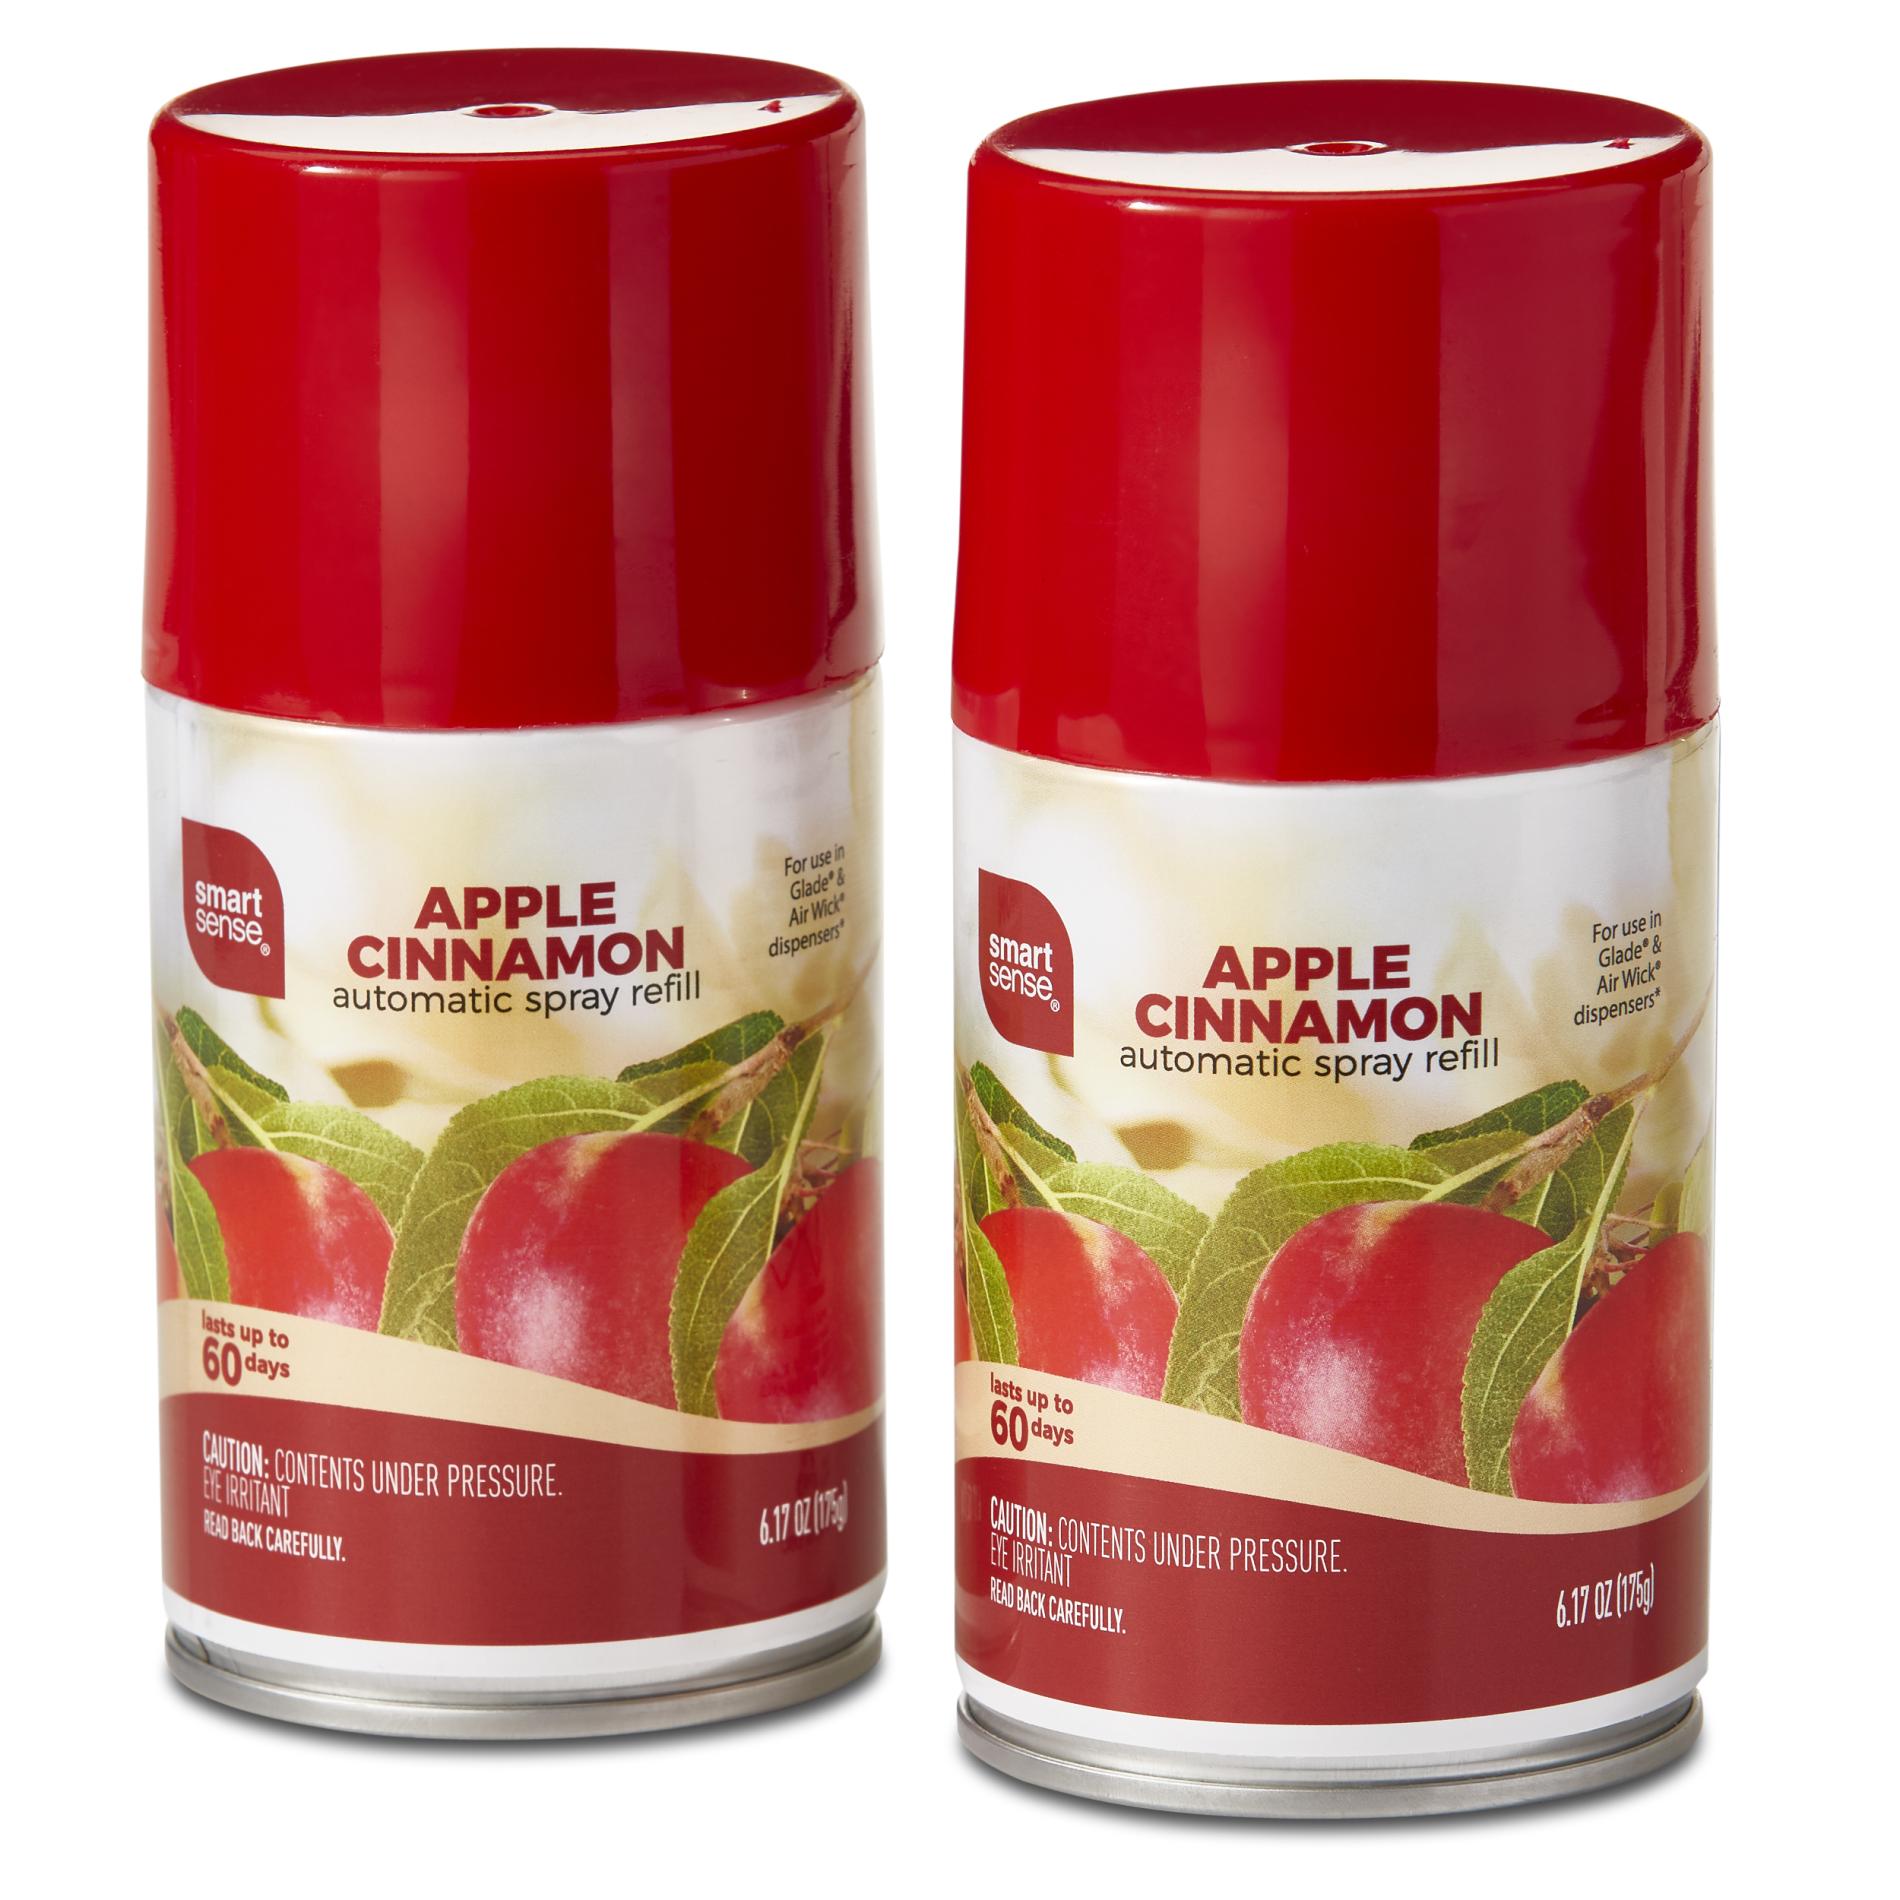 Smart Sense 2-Pack Apple Cinnamon Automatic Spray Refill Cans